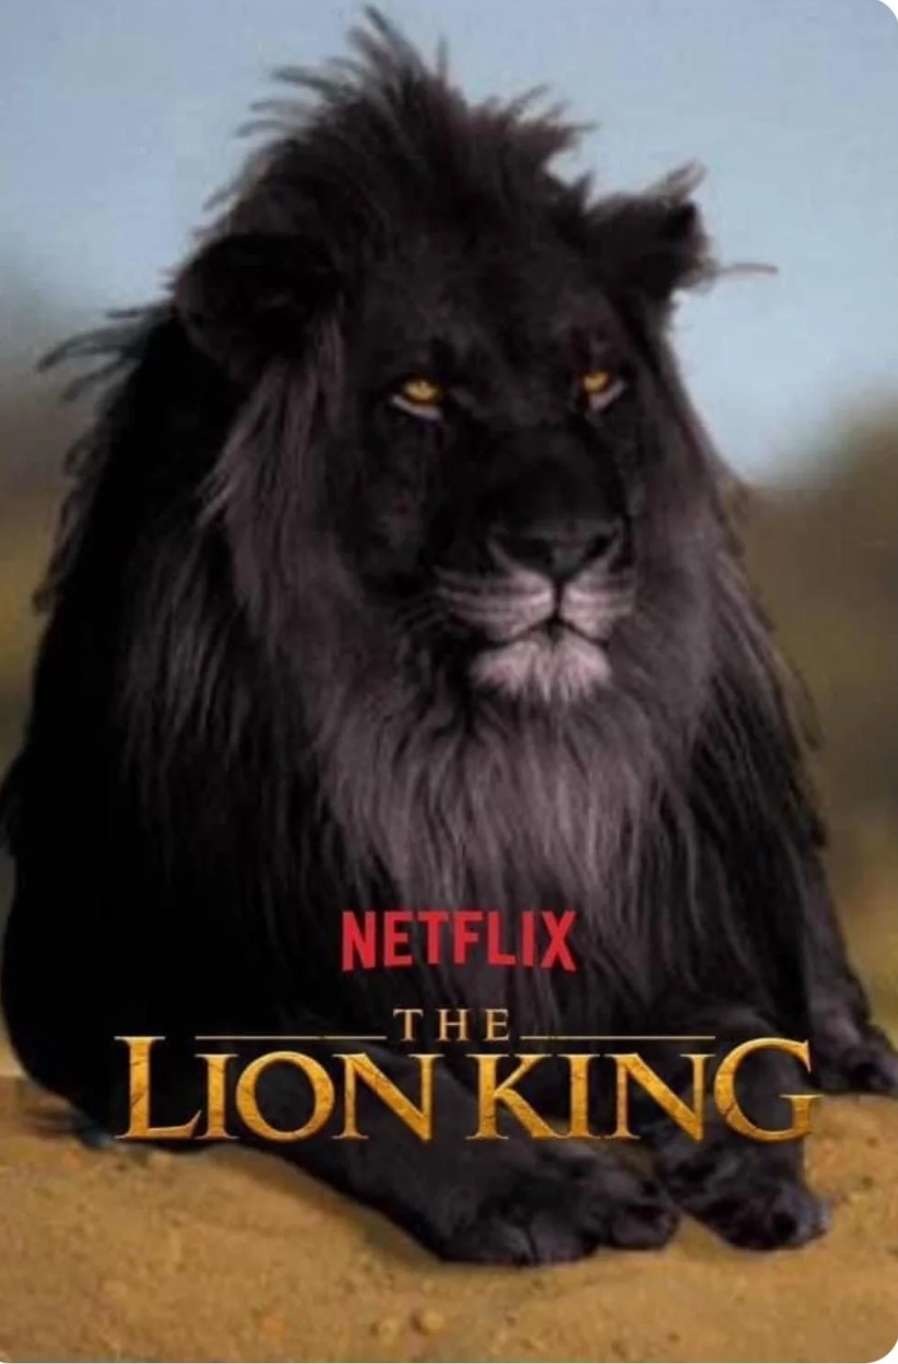 Disney The new lion king - meme